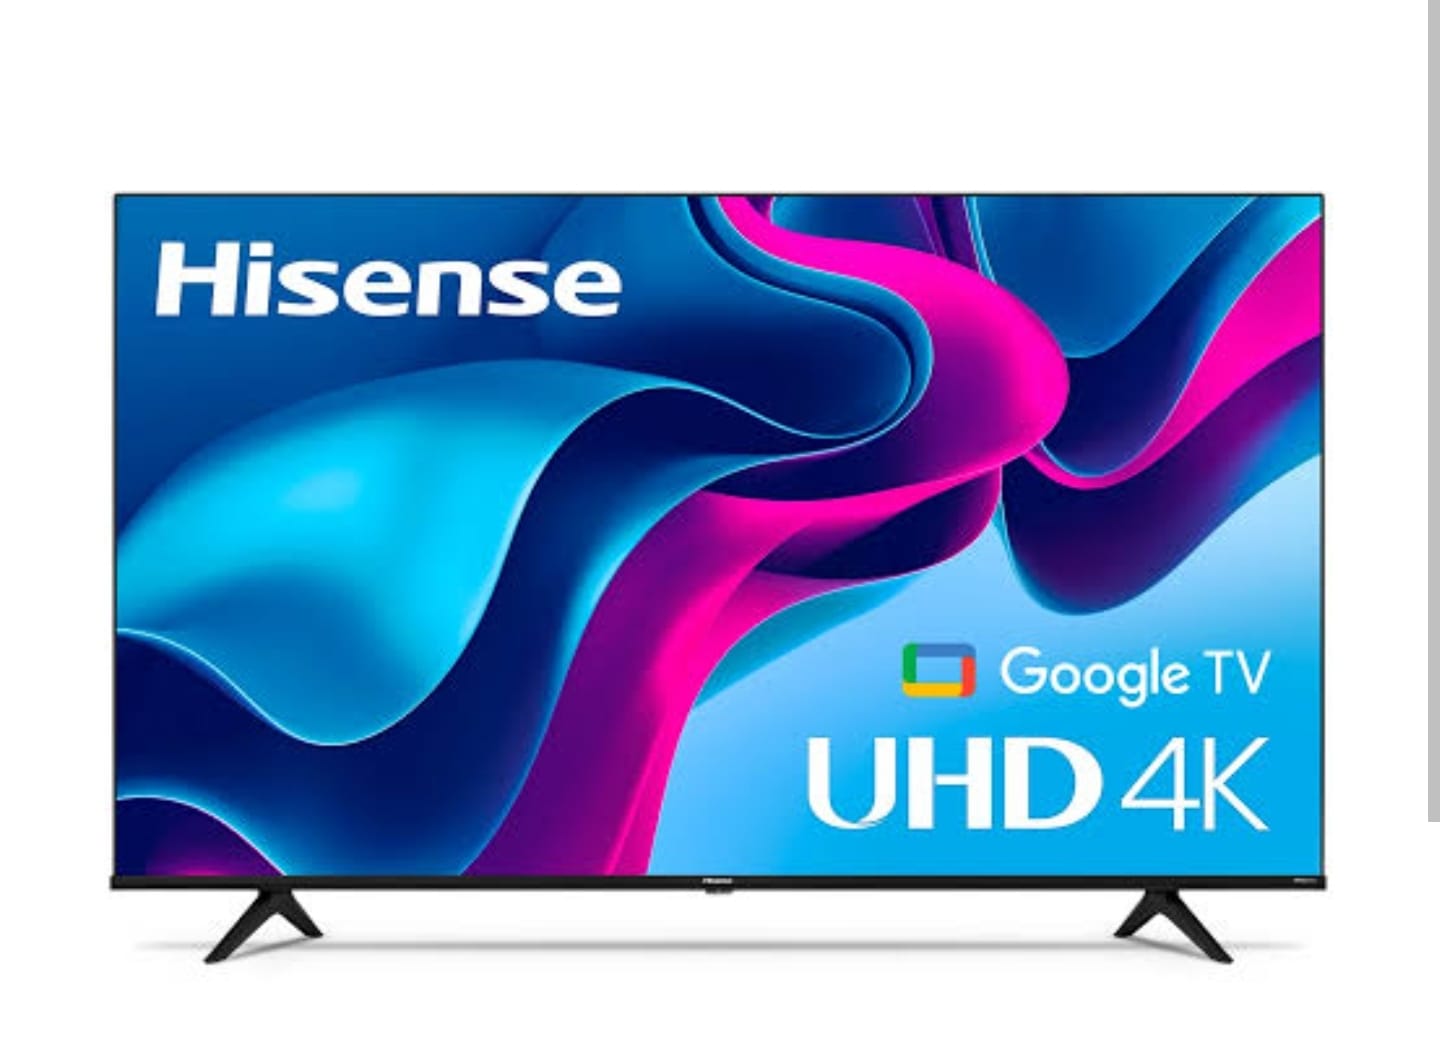 TV Hisense 43 Pulgadas 4K Ultra HD Smart TV LED 43R7G5 Reacondicionada